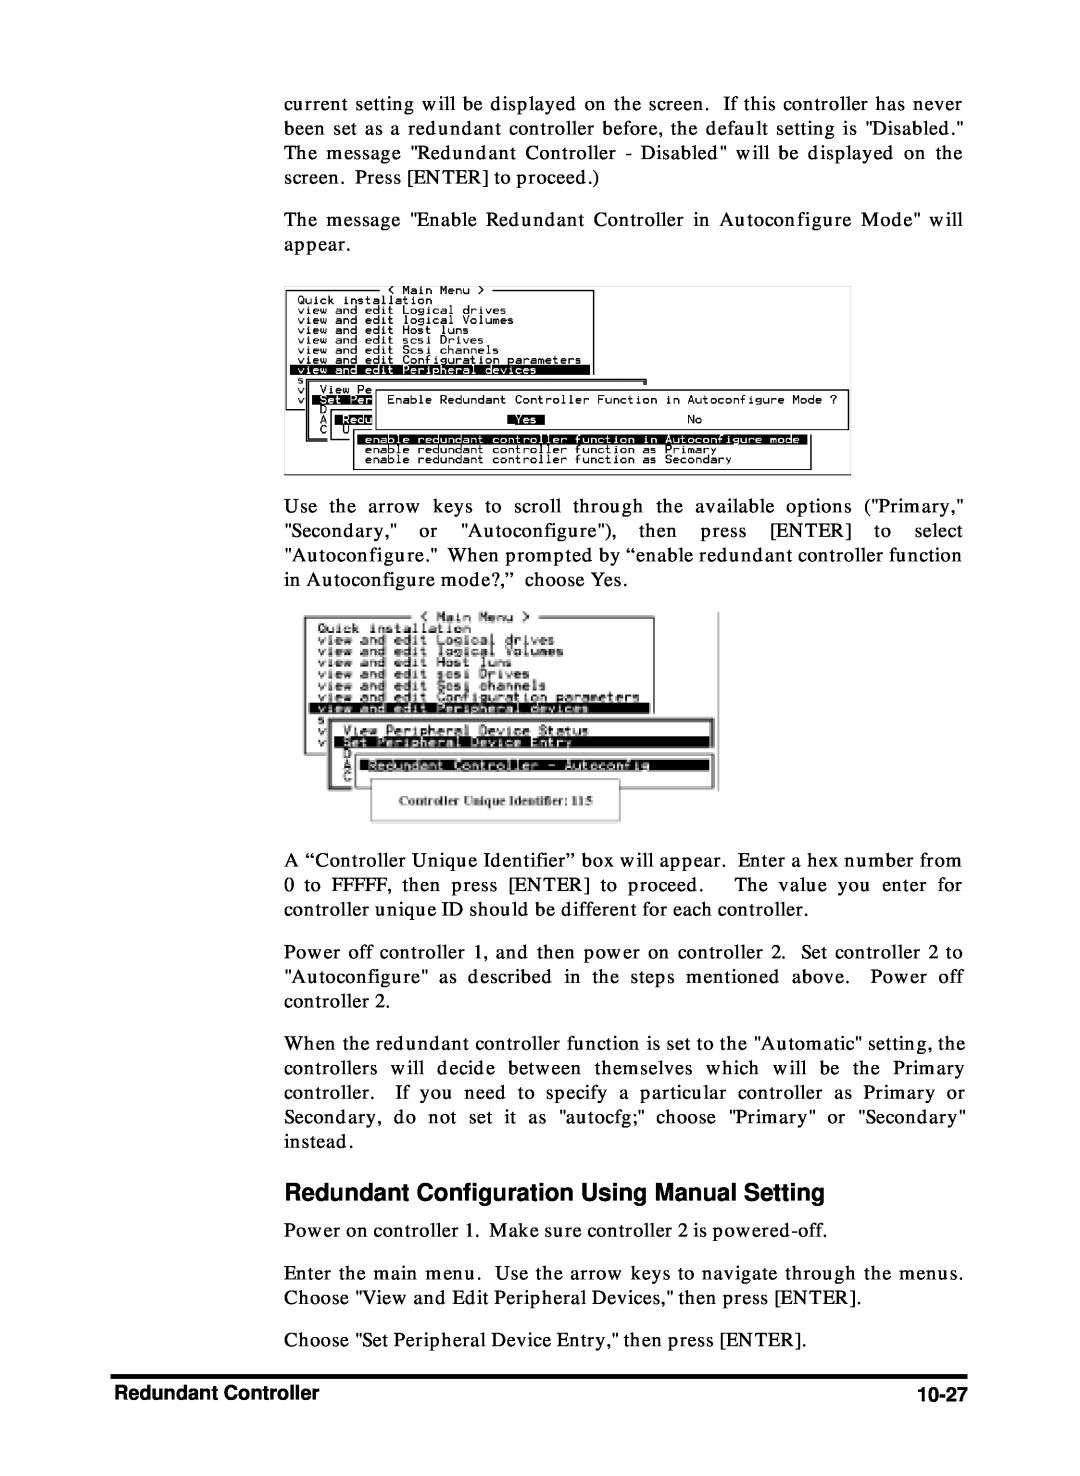 Compaq Infortrend manual Redundant Configuration Using Manual Setting, Redundant Controller, 10-27 